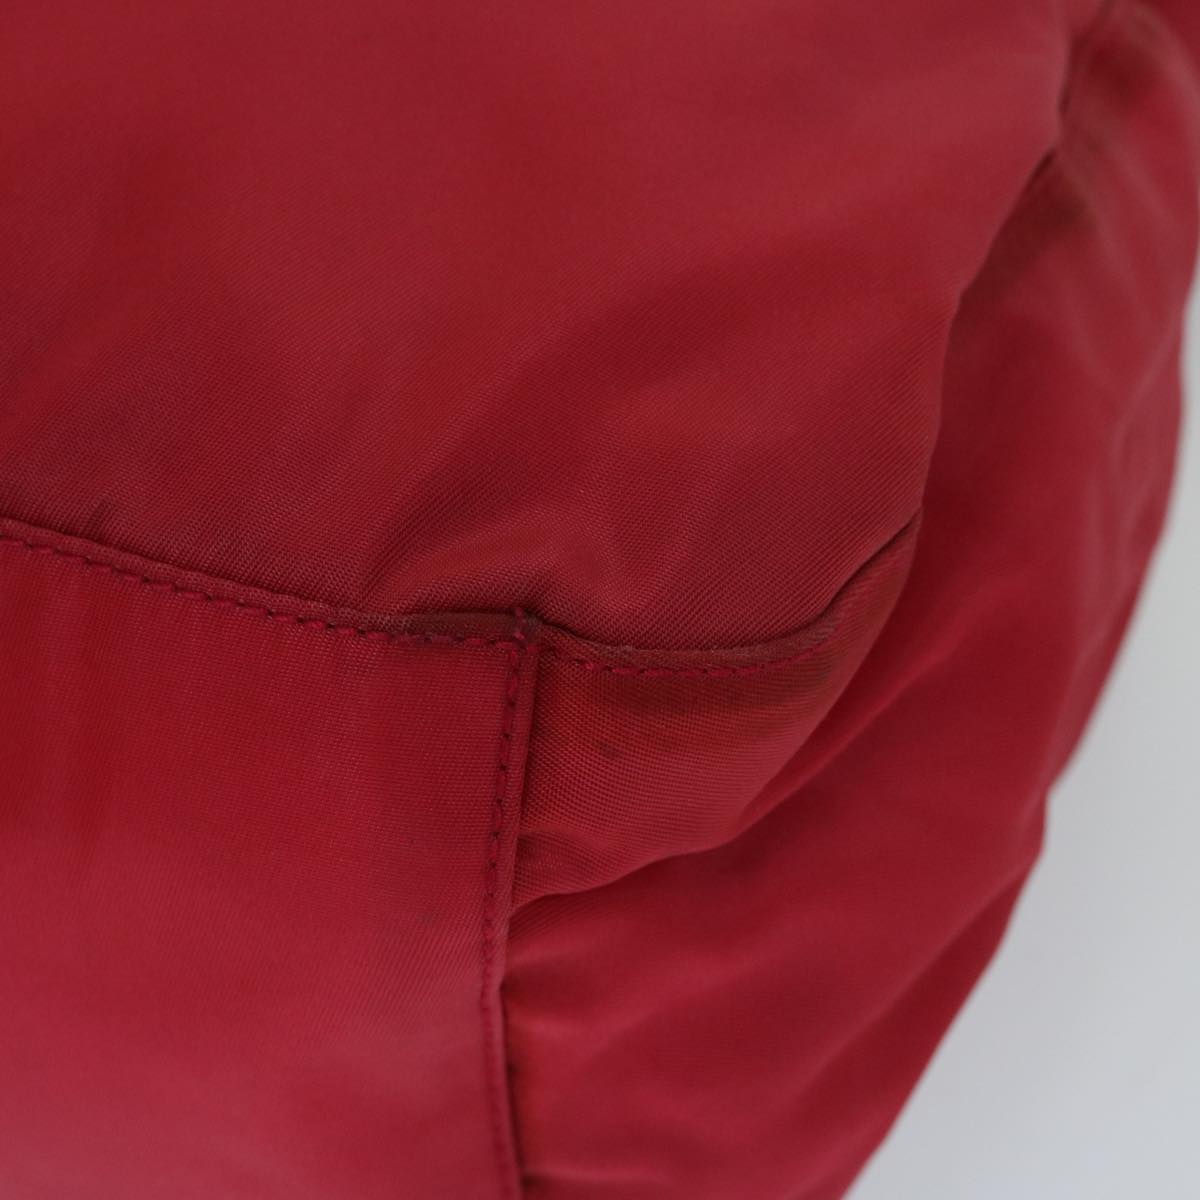 PRADA Shoulder Bag Nylon Red Auth 67982